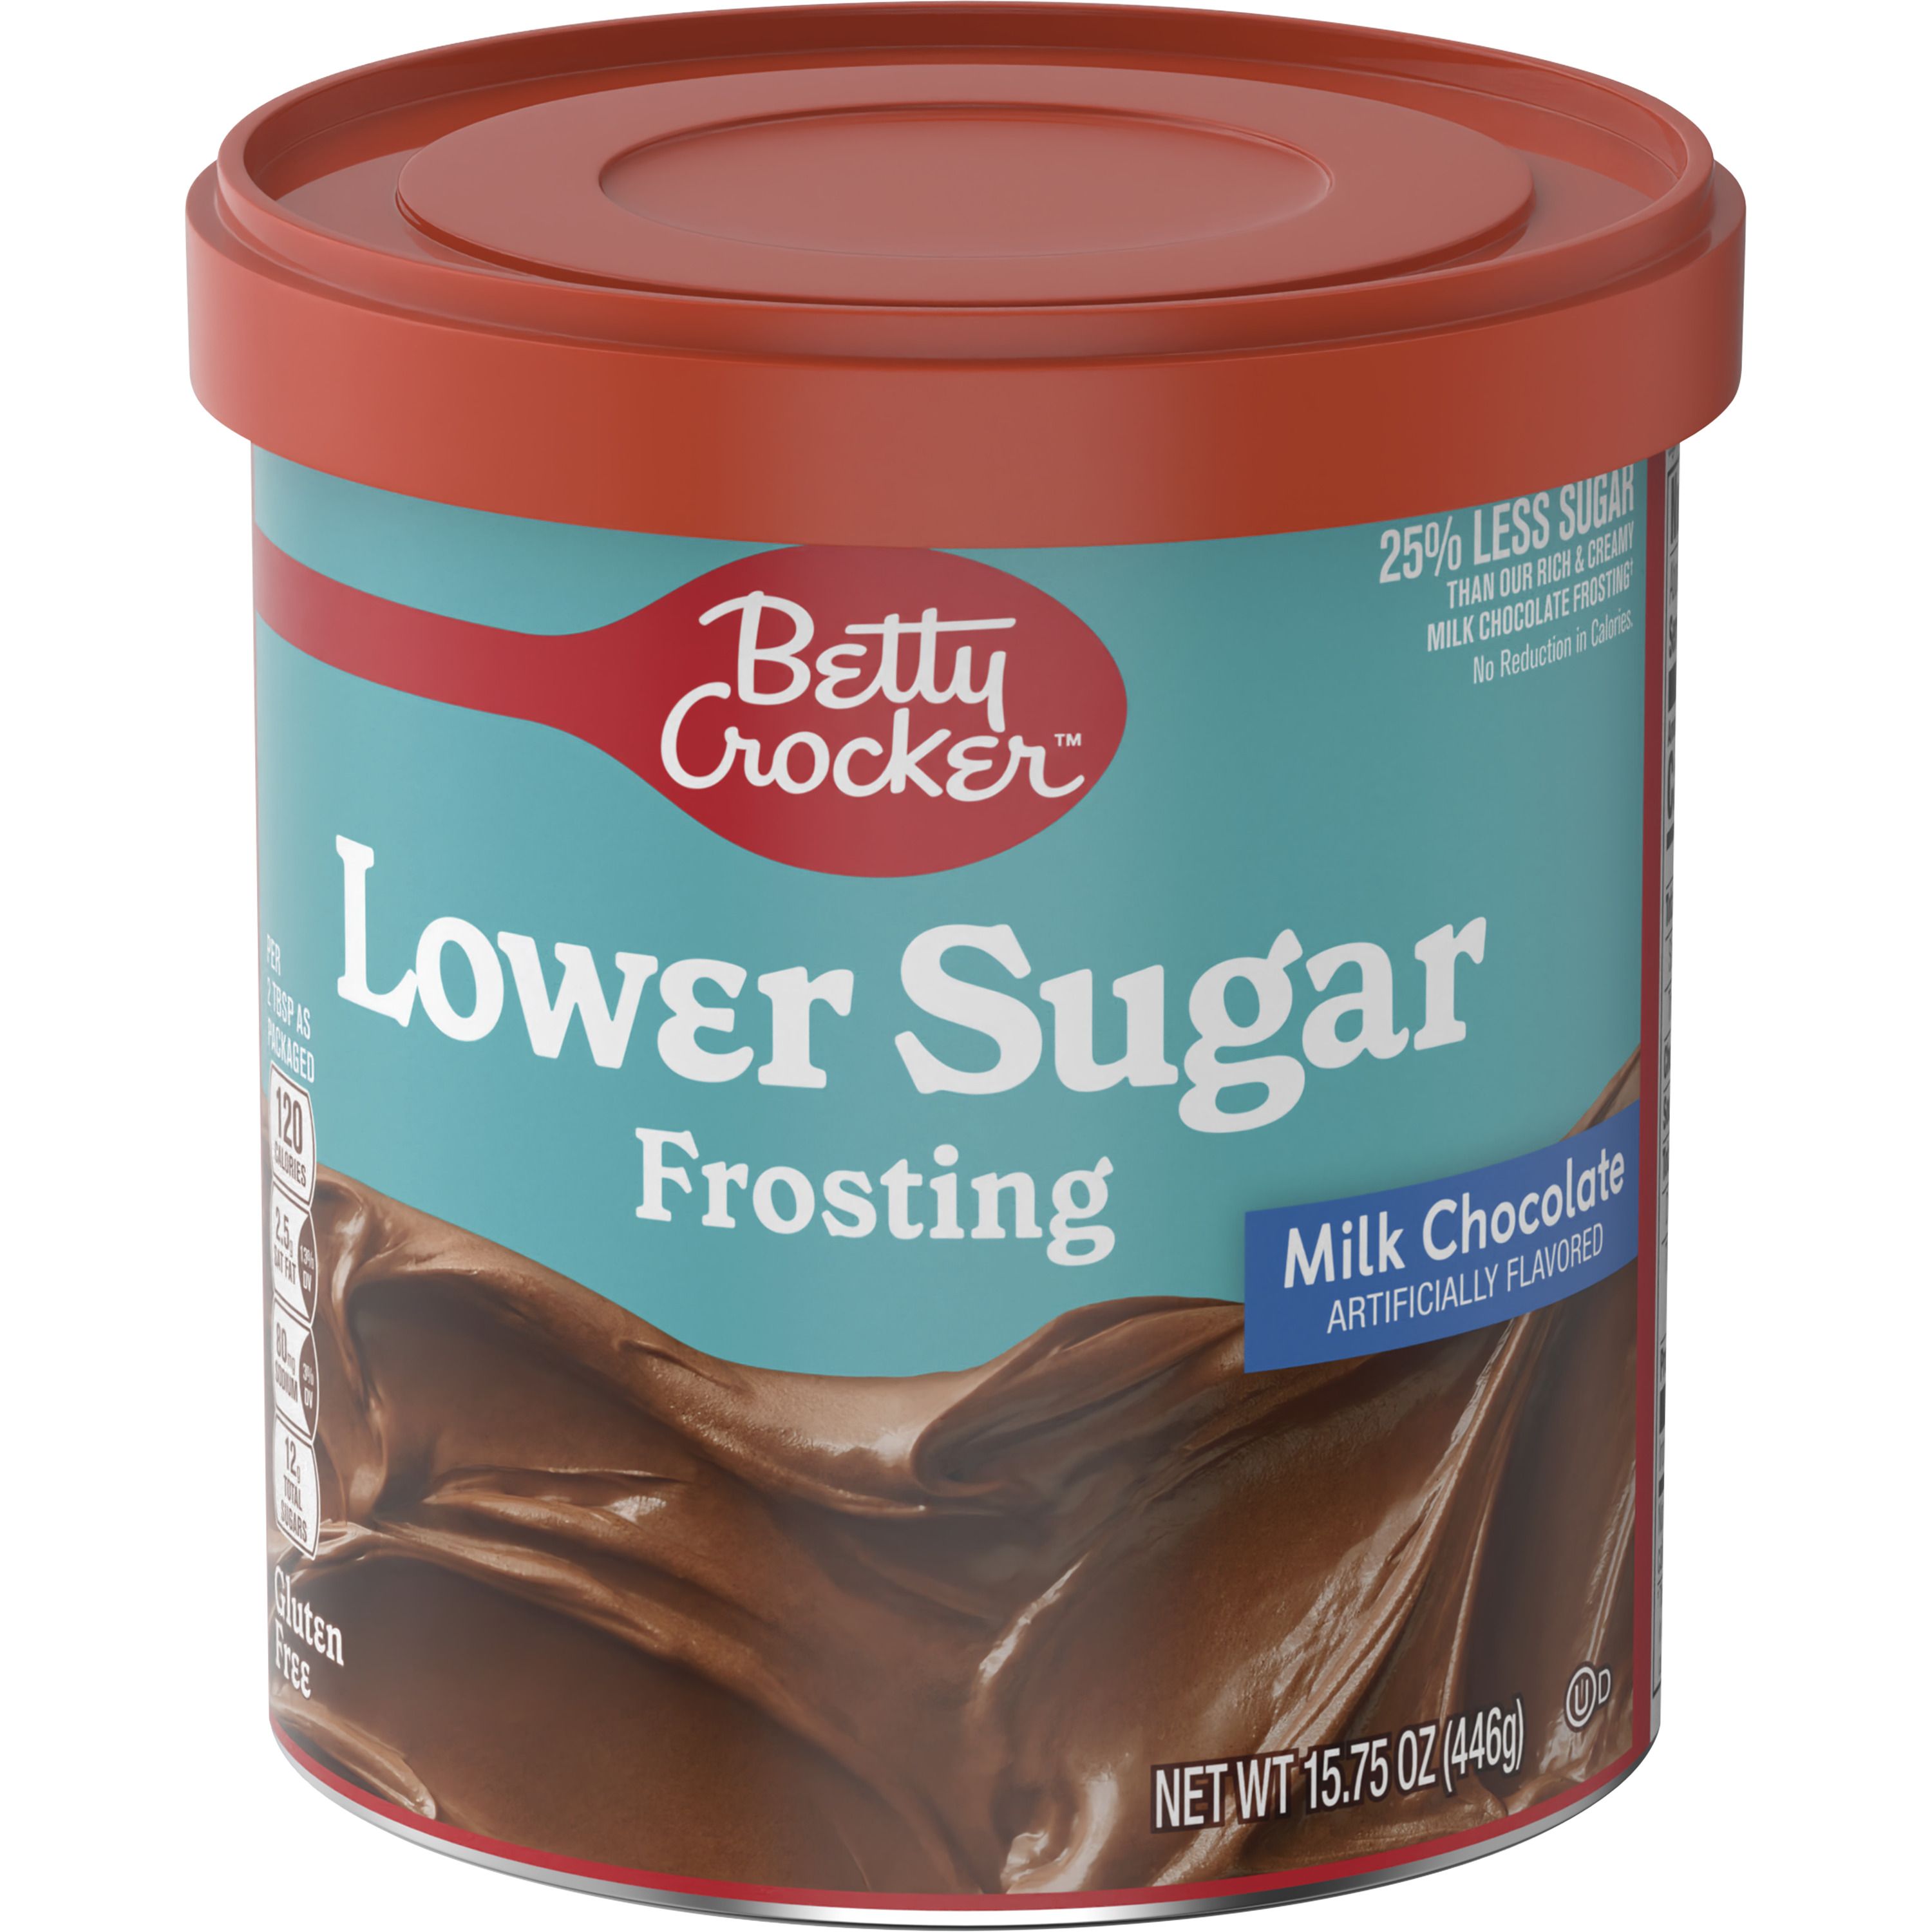 Betty Crocker Lower Sugar Frosting, Milk Chocolate Flavored, 15.75 oz - Front